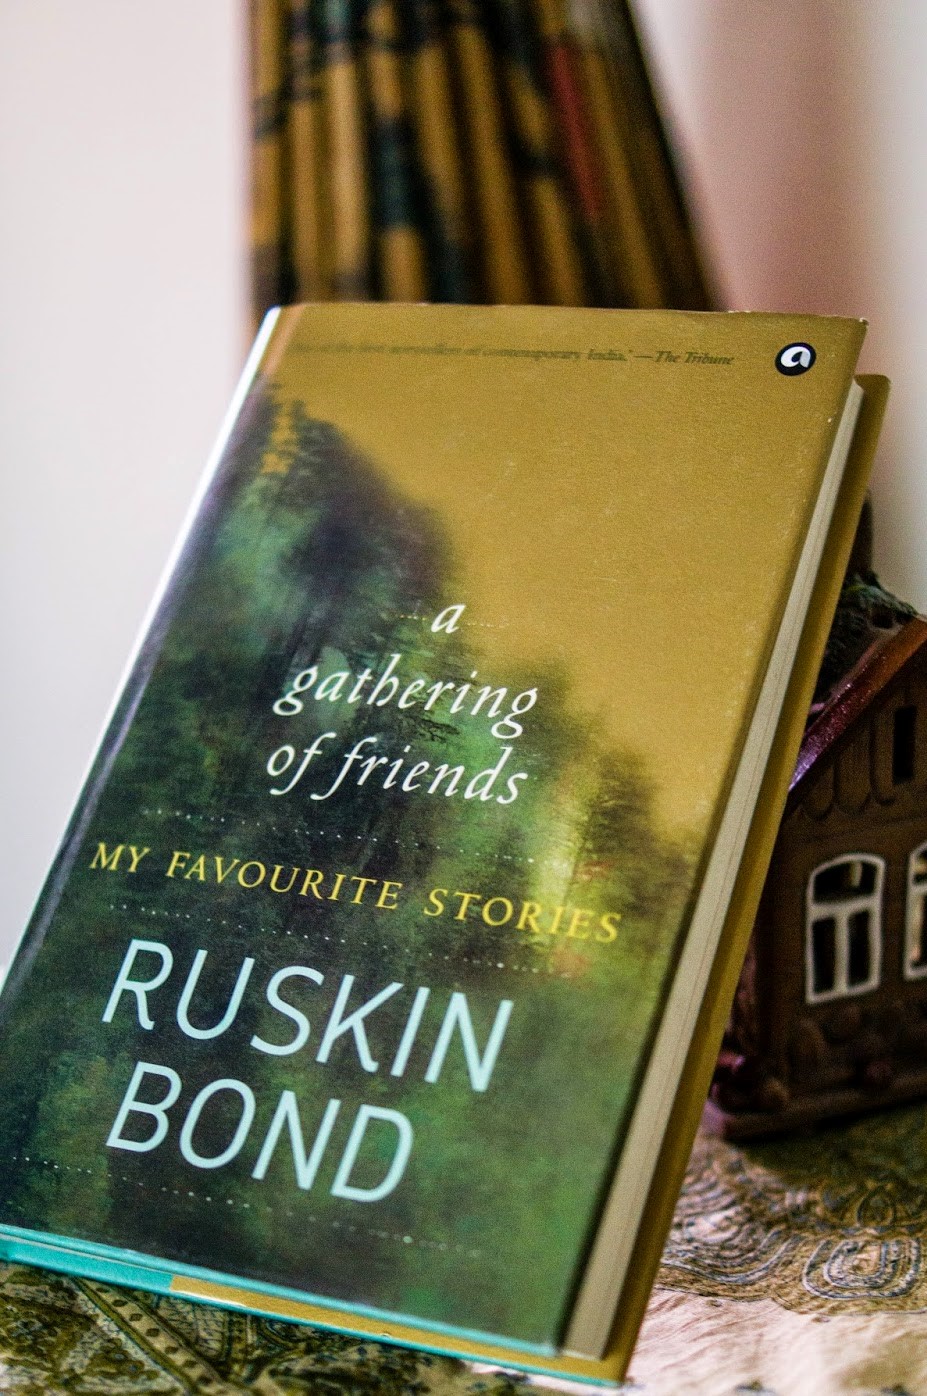 Ruskin bond A gathering of friends.jpg